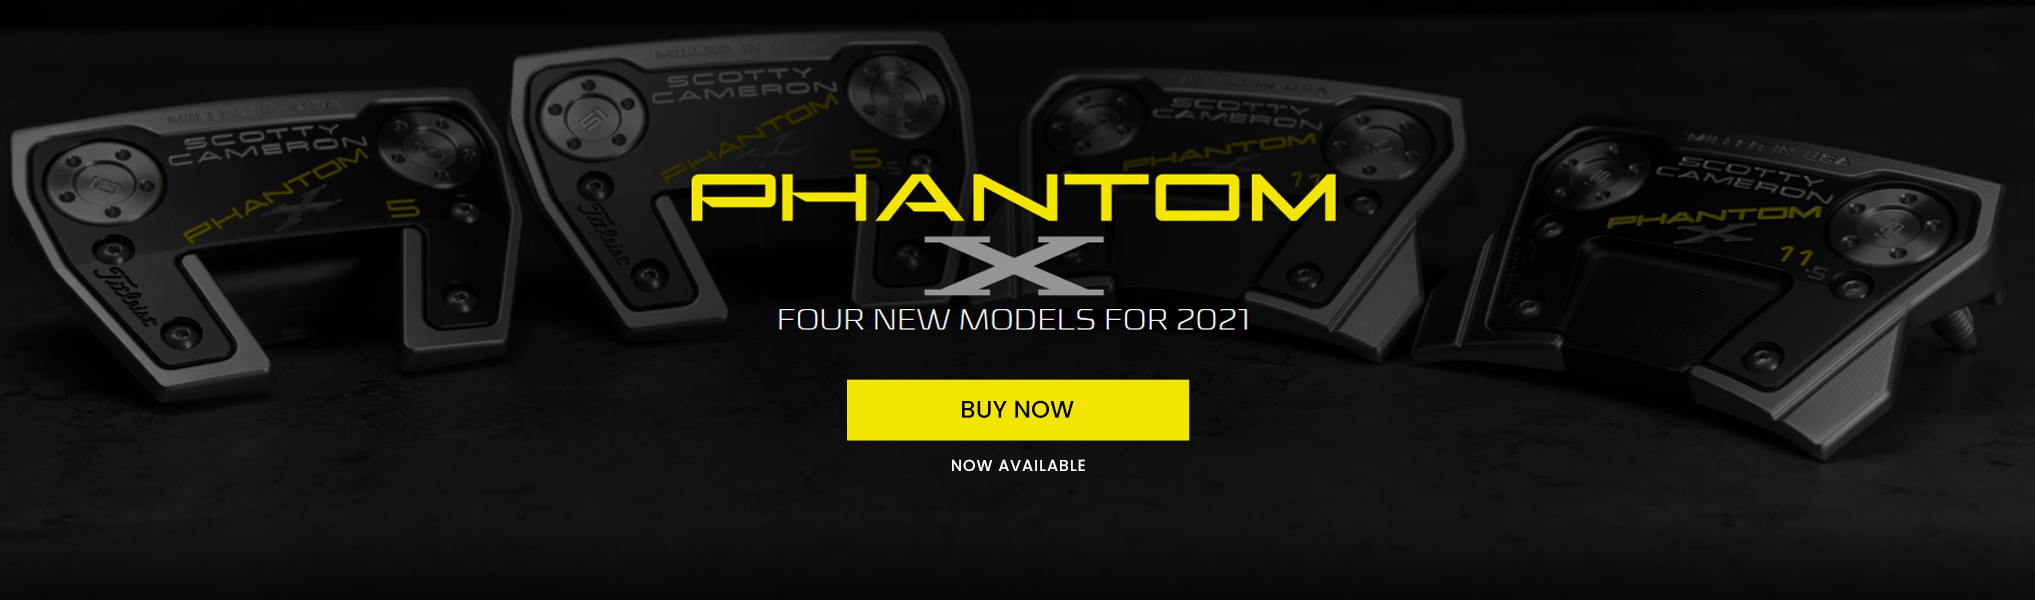 Scotty Cameron Phantom X Buy Now